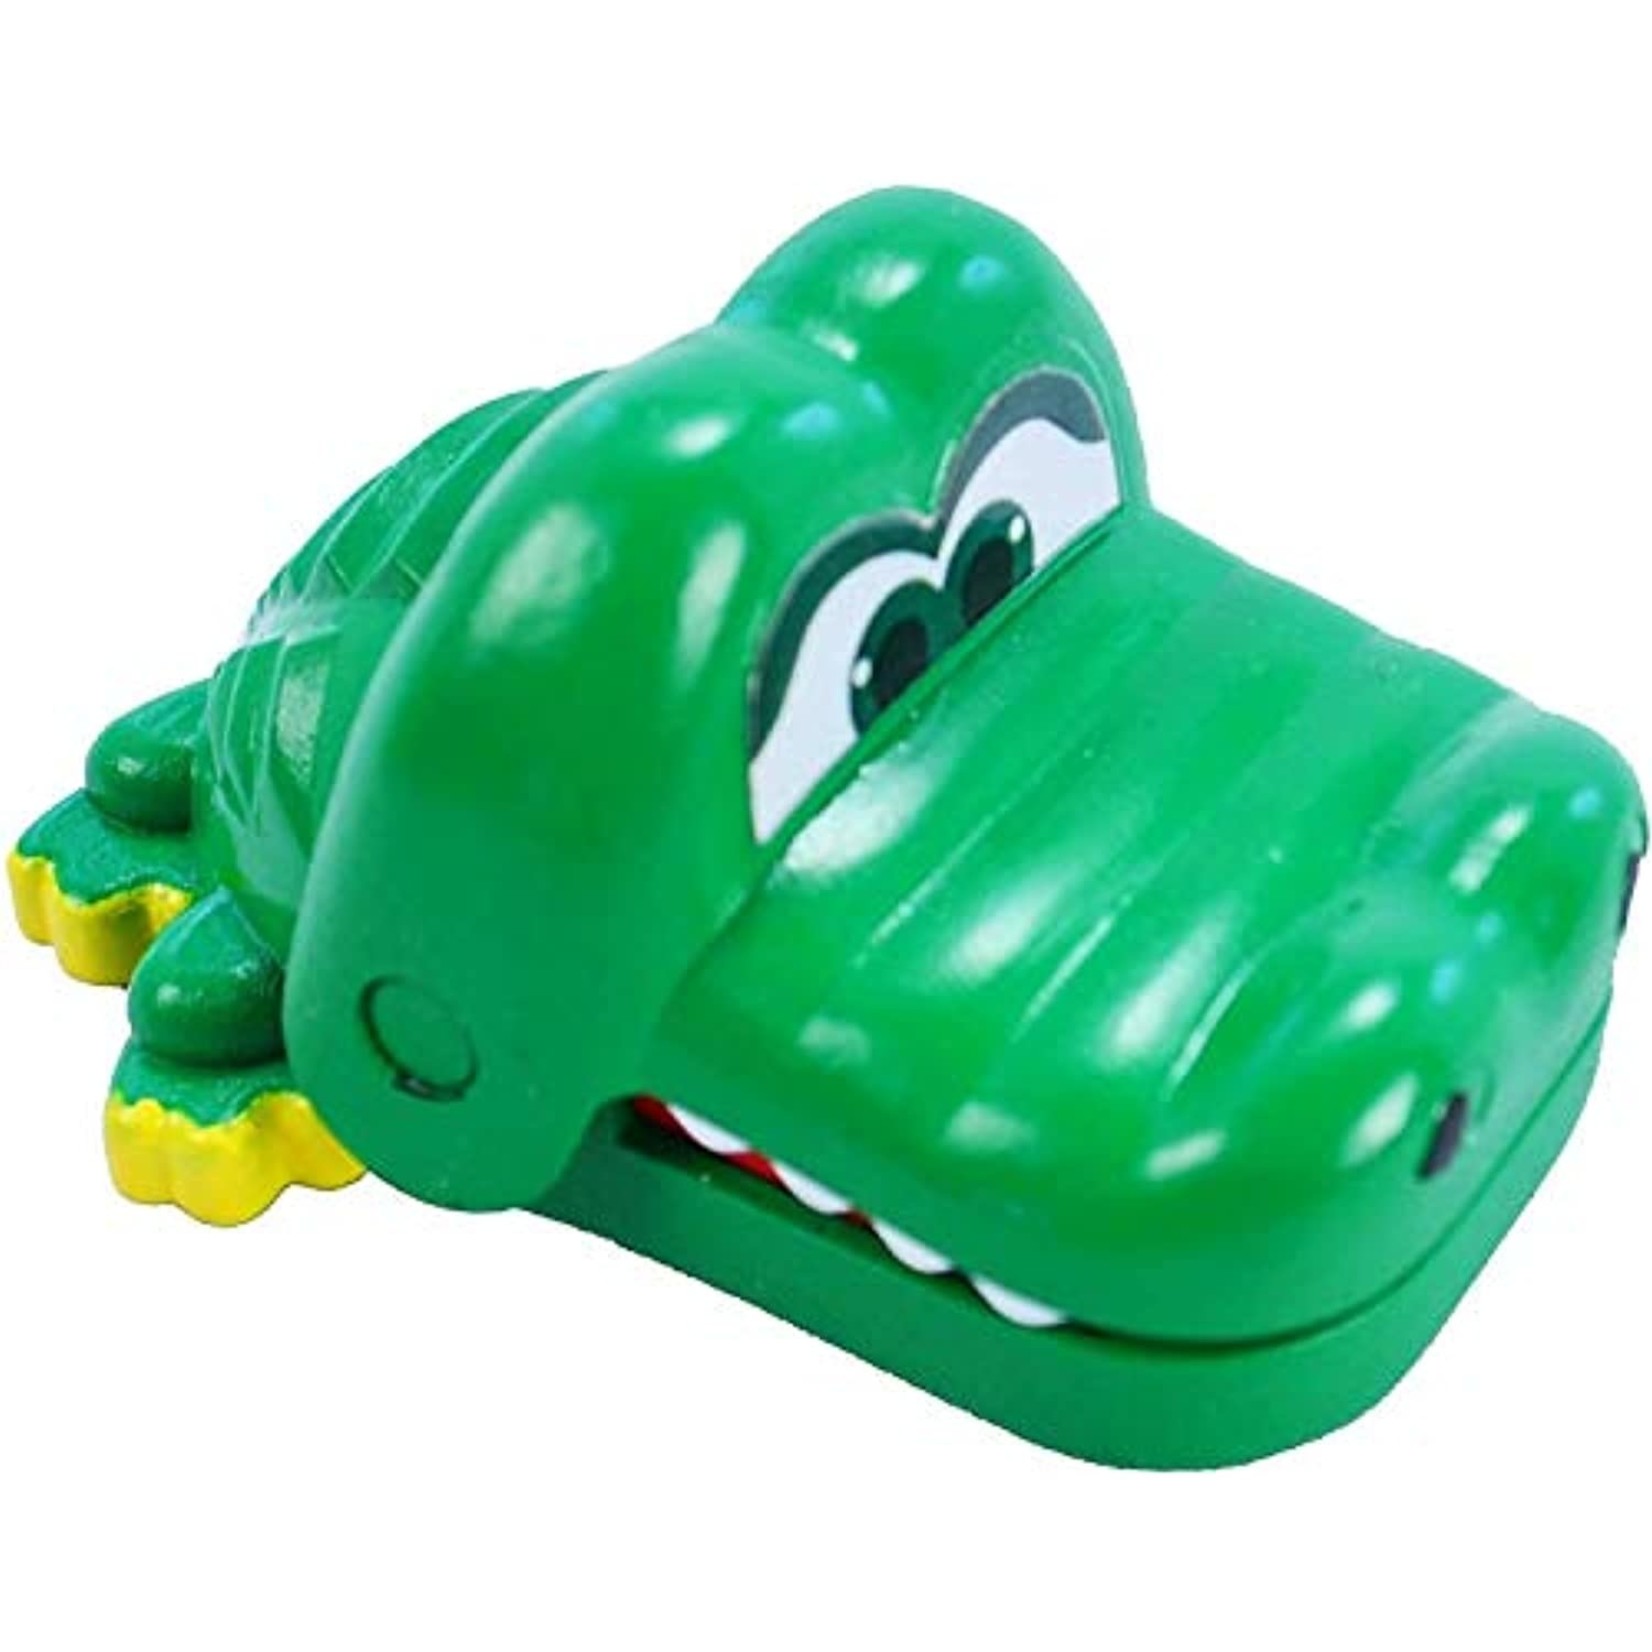 World's Smallest Crocodile Dentist Game